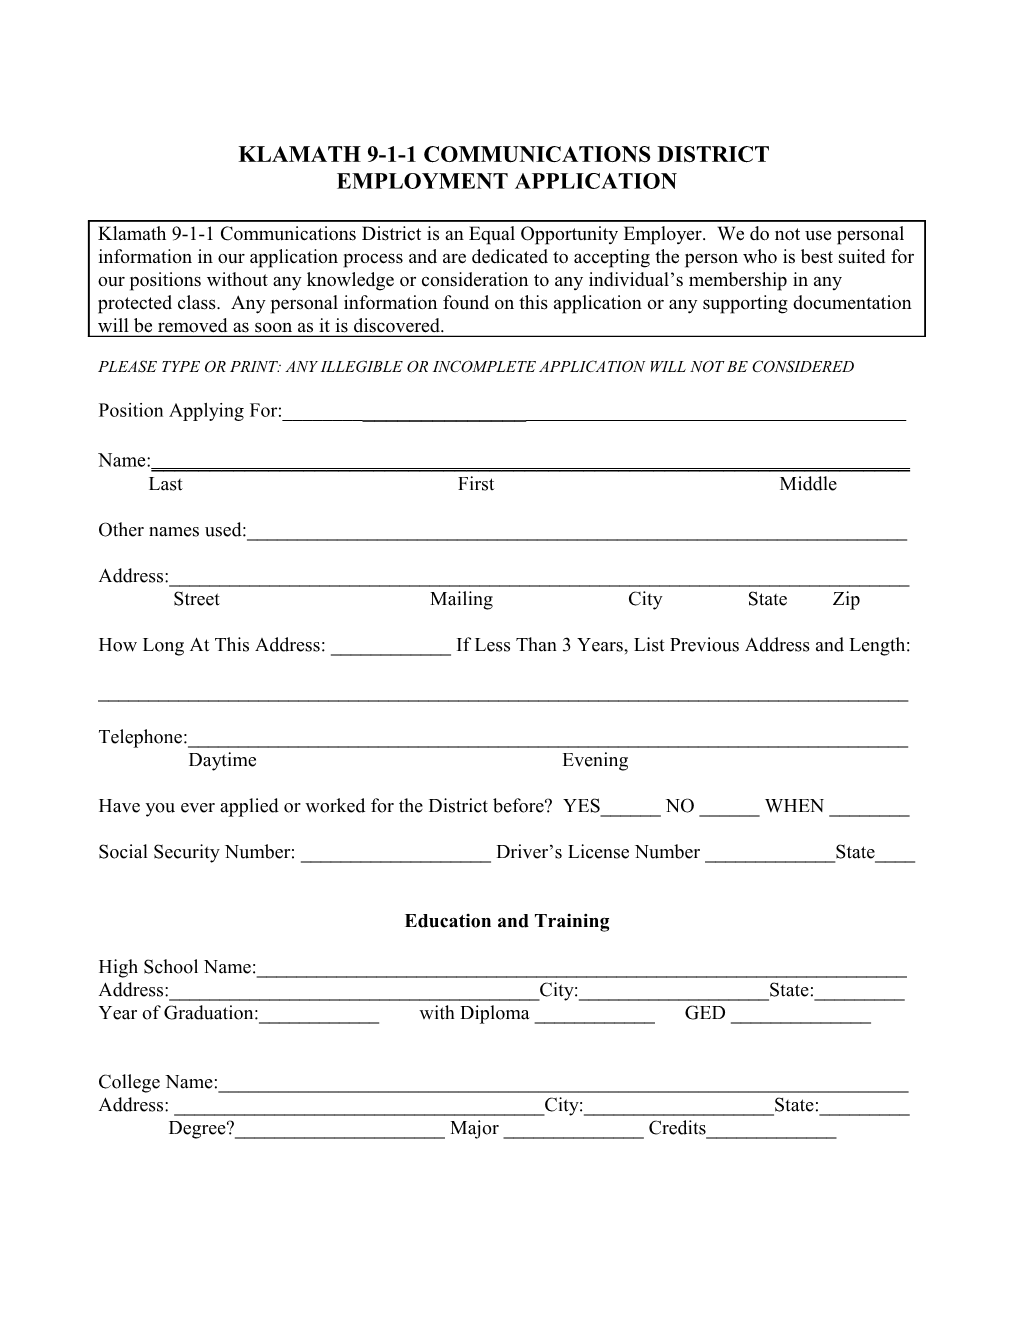 Klamath County Emergency Communications District Employment Application